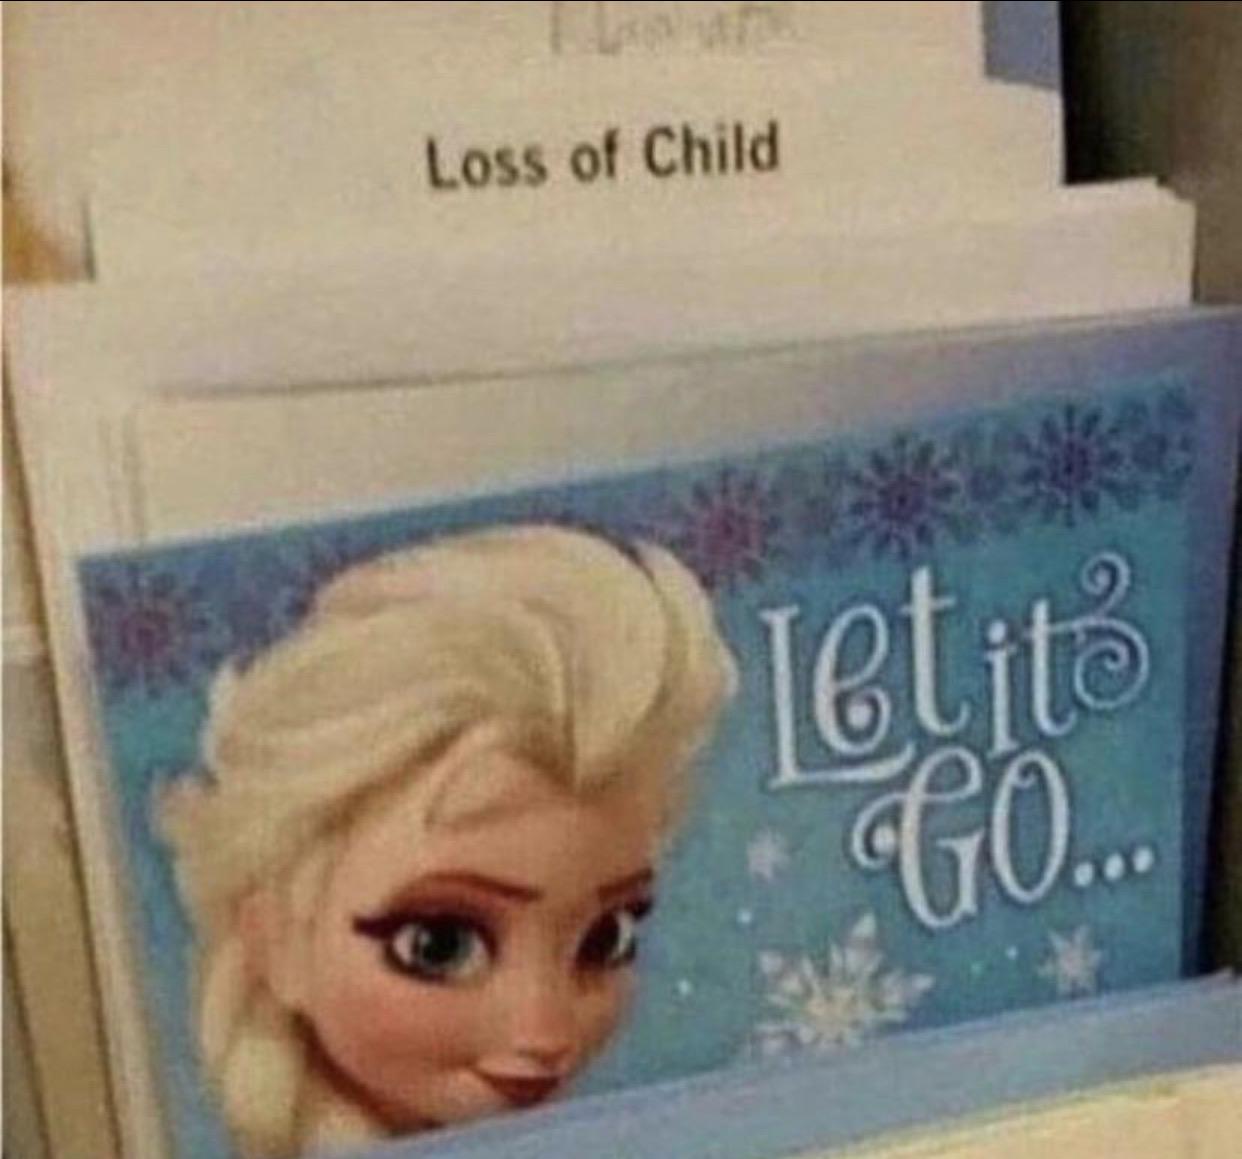 loss of child let it go - Loss of Child elito Go...